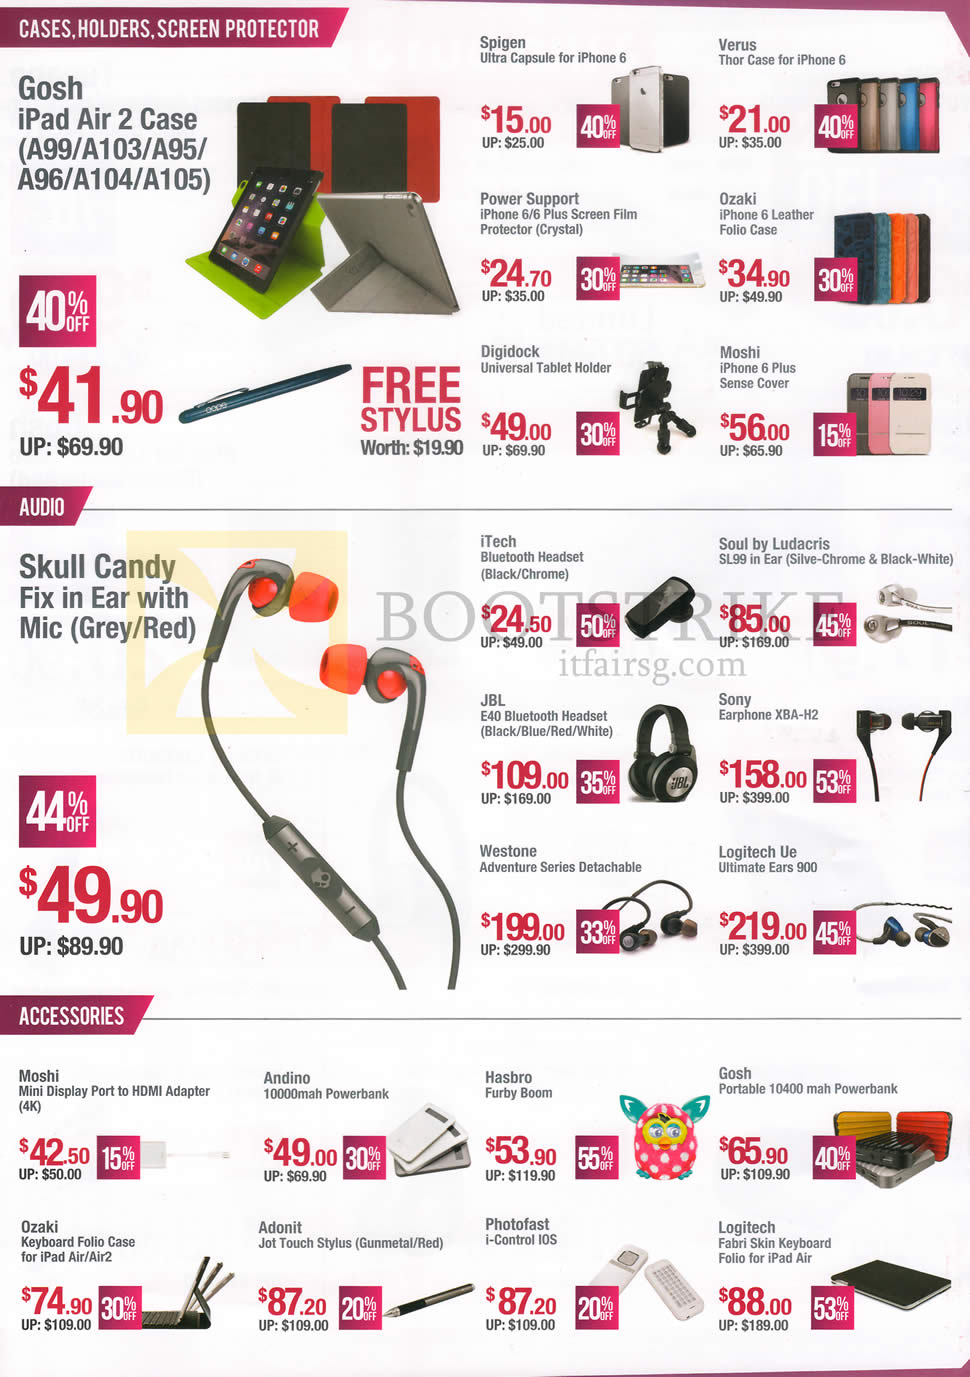 IT SHOW 2015 price list image brochure of Nubox Cases, Holders, Screen Protector, Earphones, Headphones, HDMI Adapter, Powerbank, Stylus Pen, Keyboard